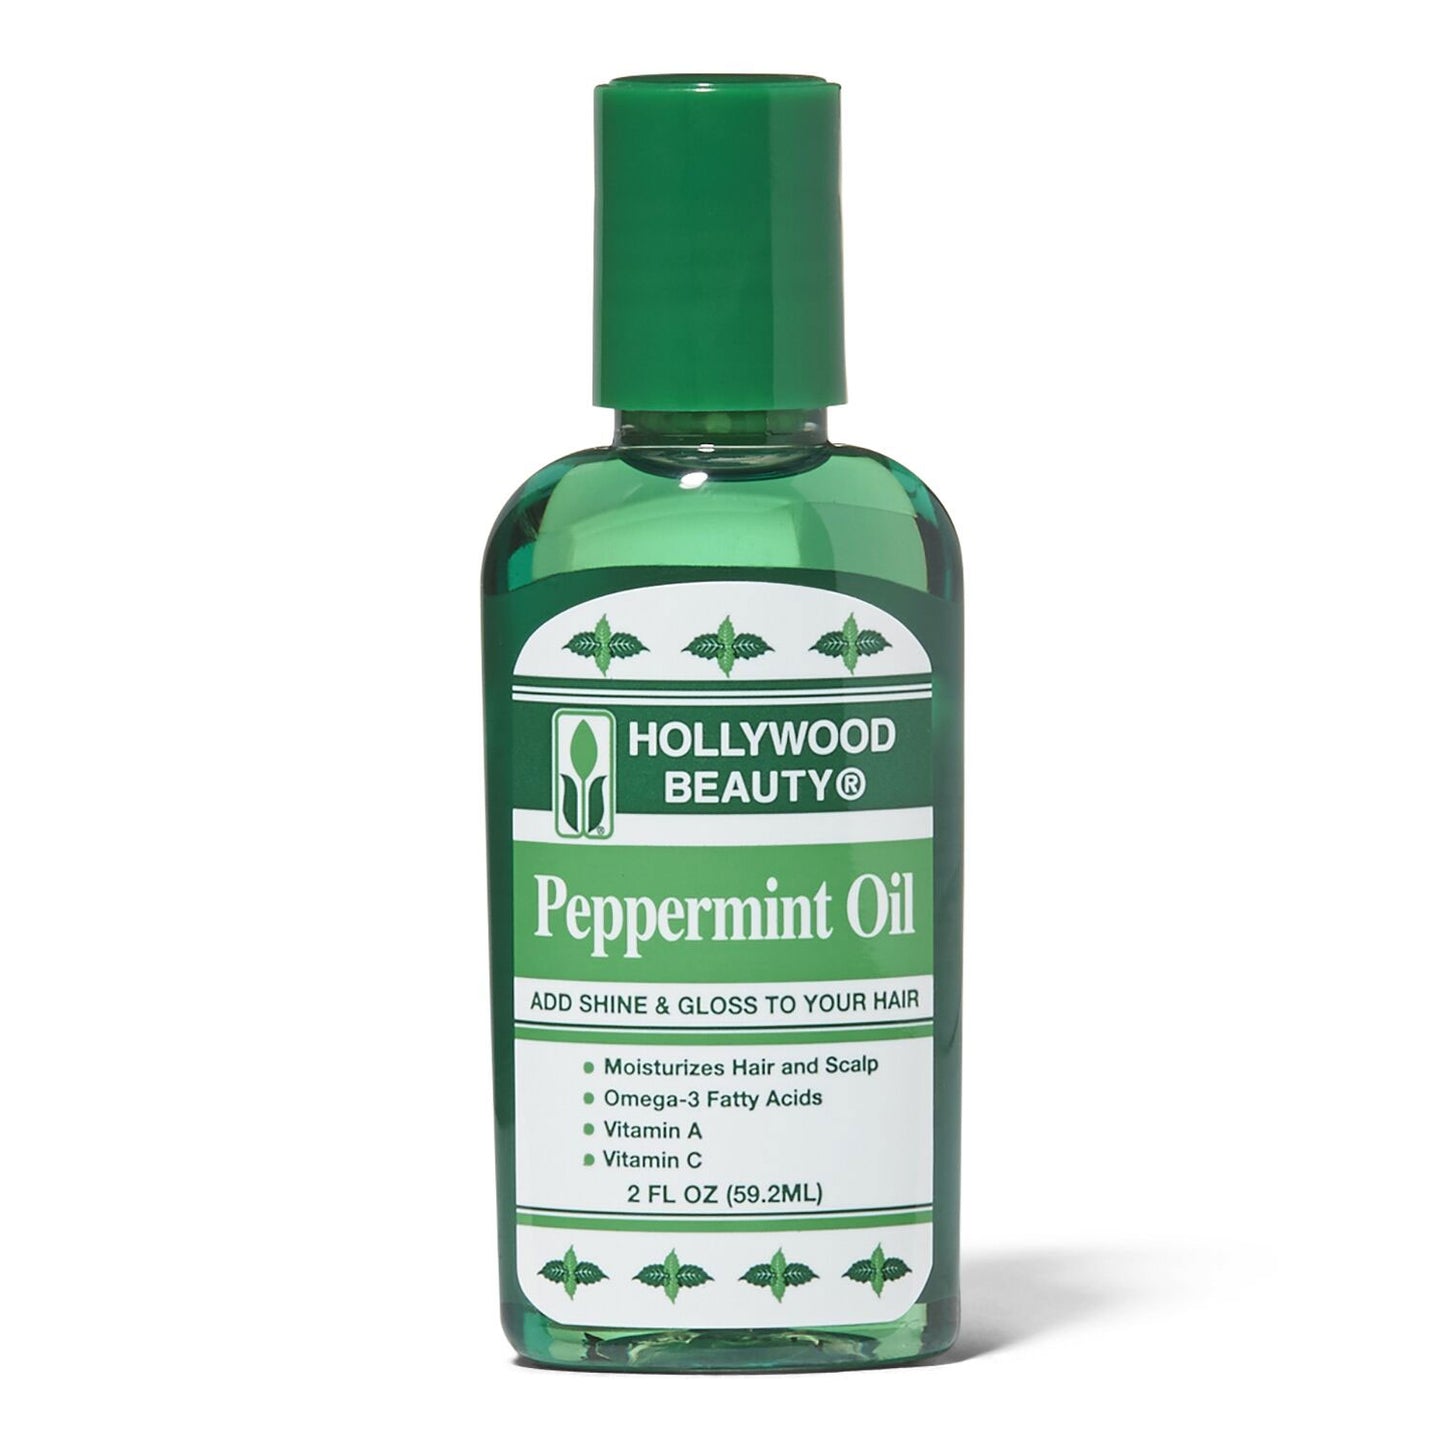 Hollywood Beauty Peppermint